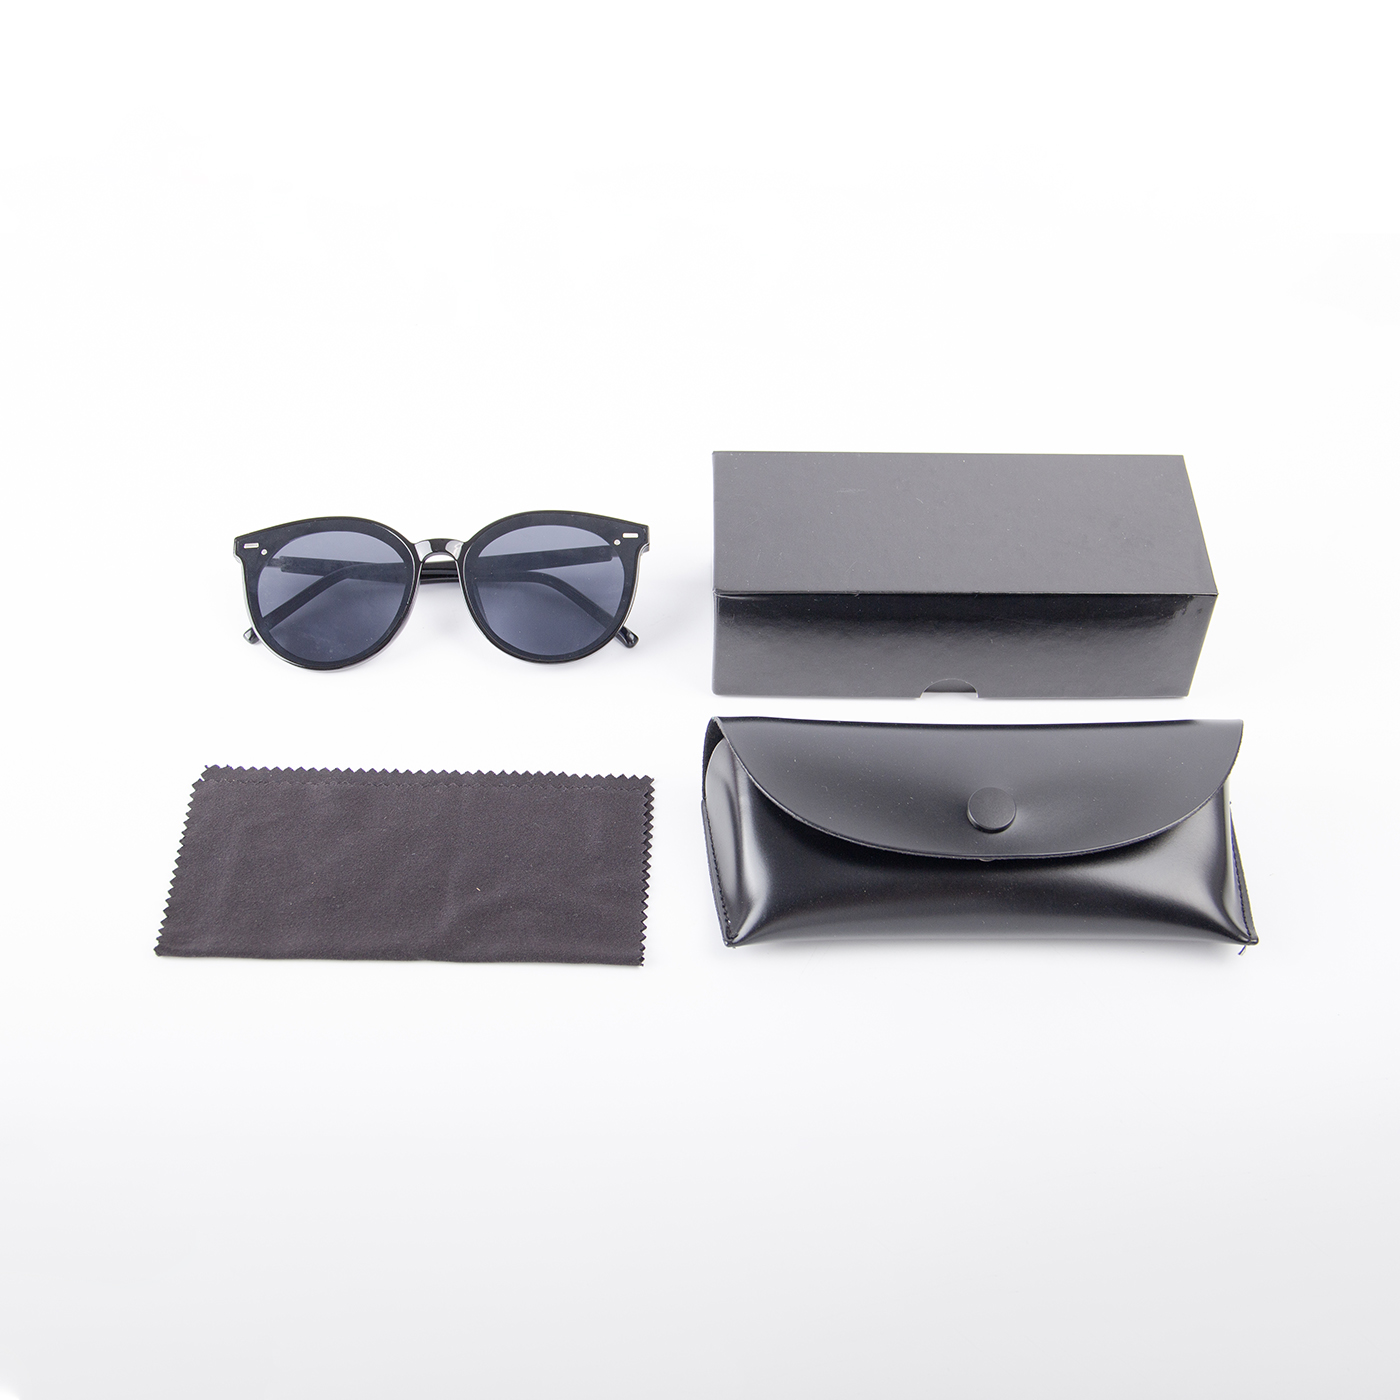 Custom Sunglasses With Case Set3